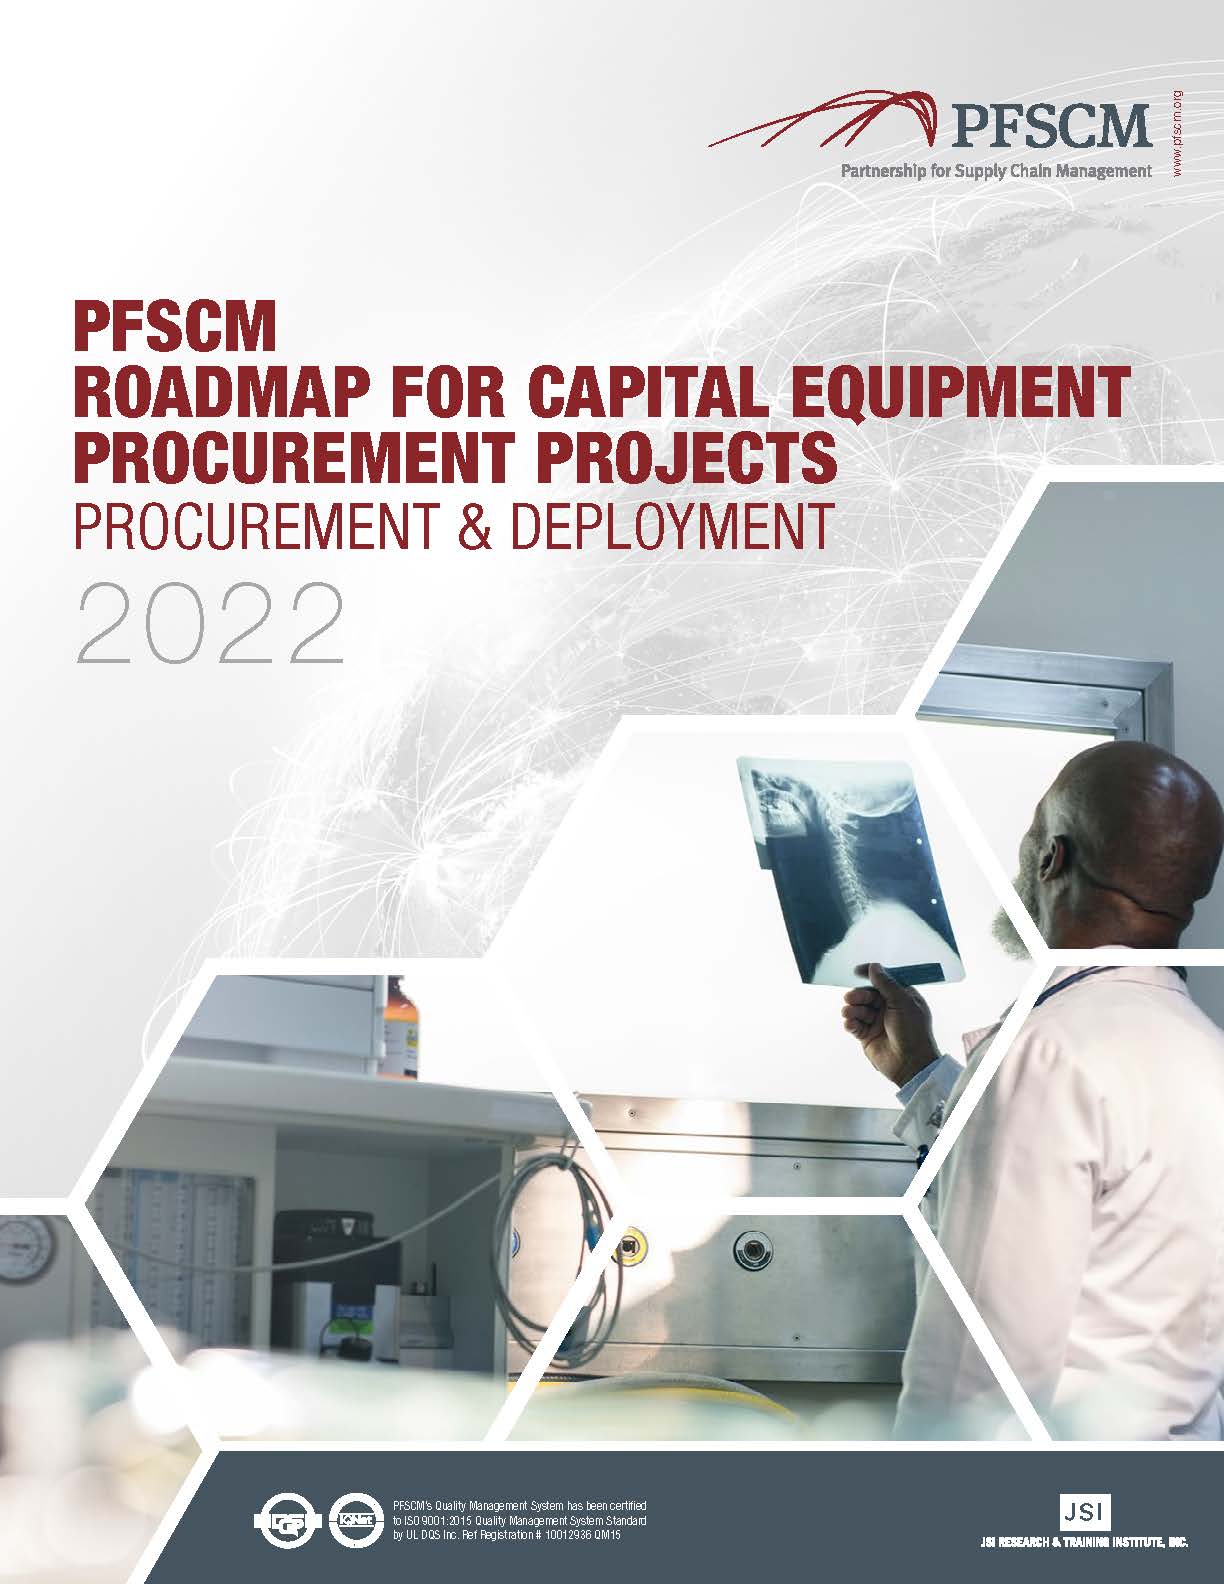 PFSCM Roadmap for Capital Equipment Procurement Projects 2022